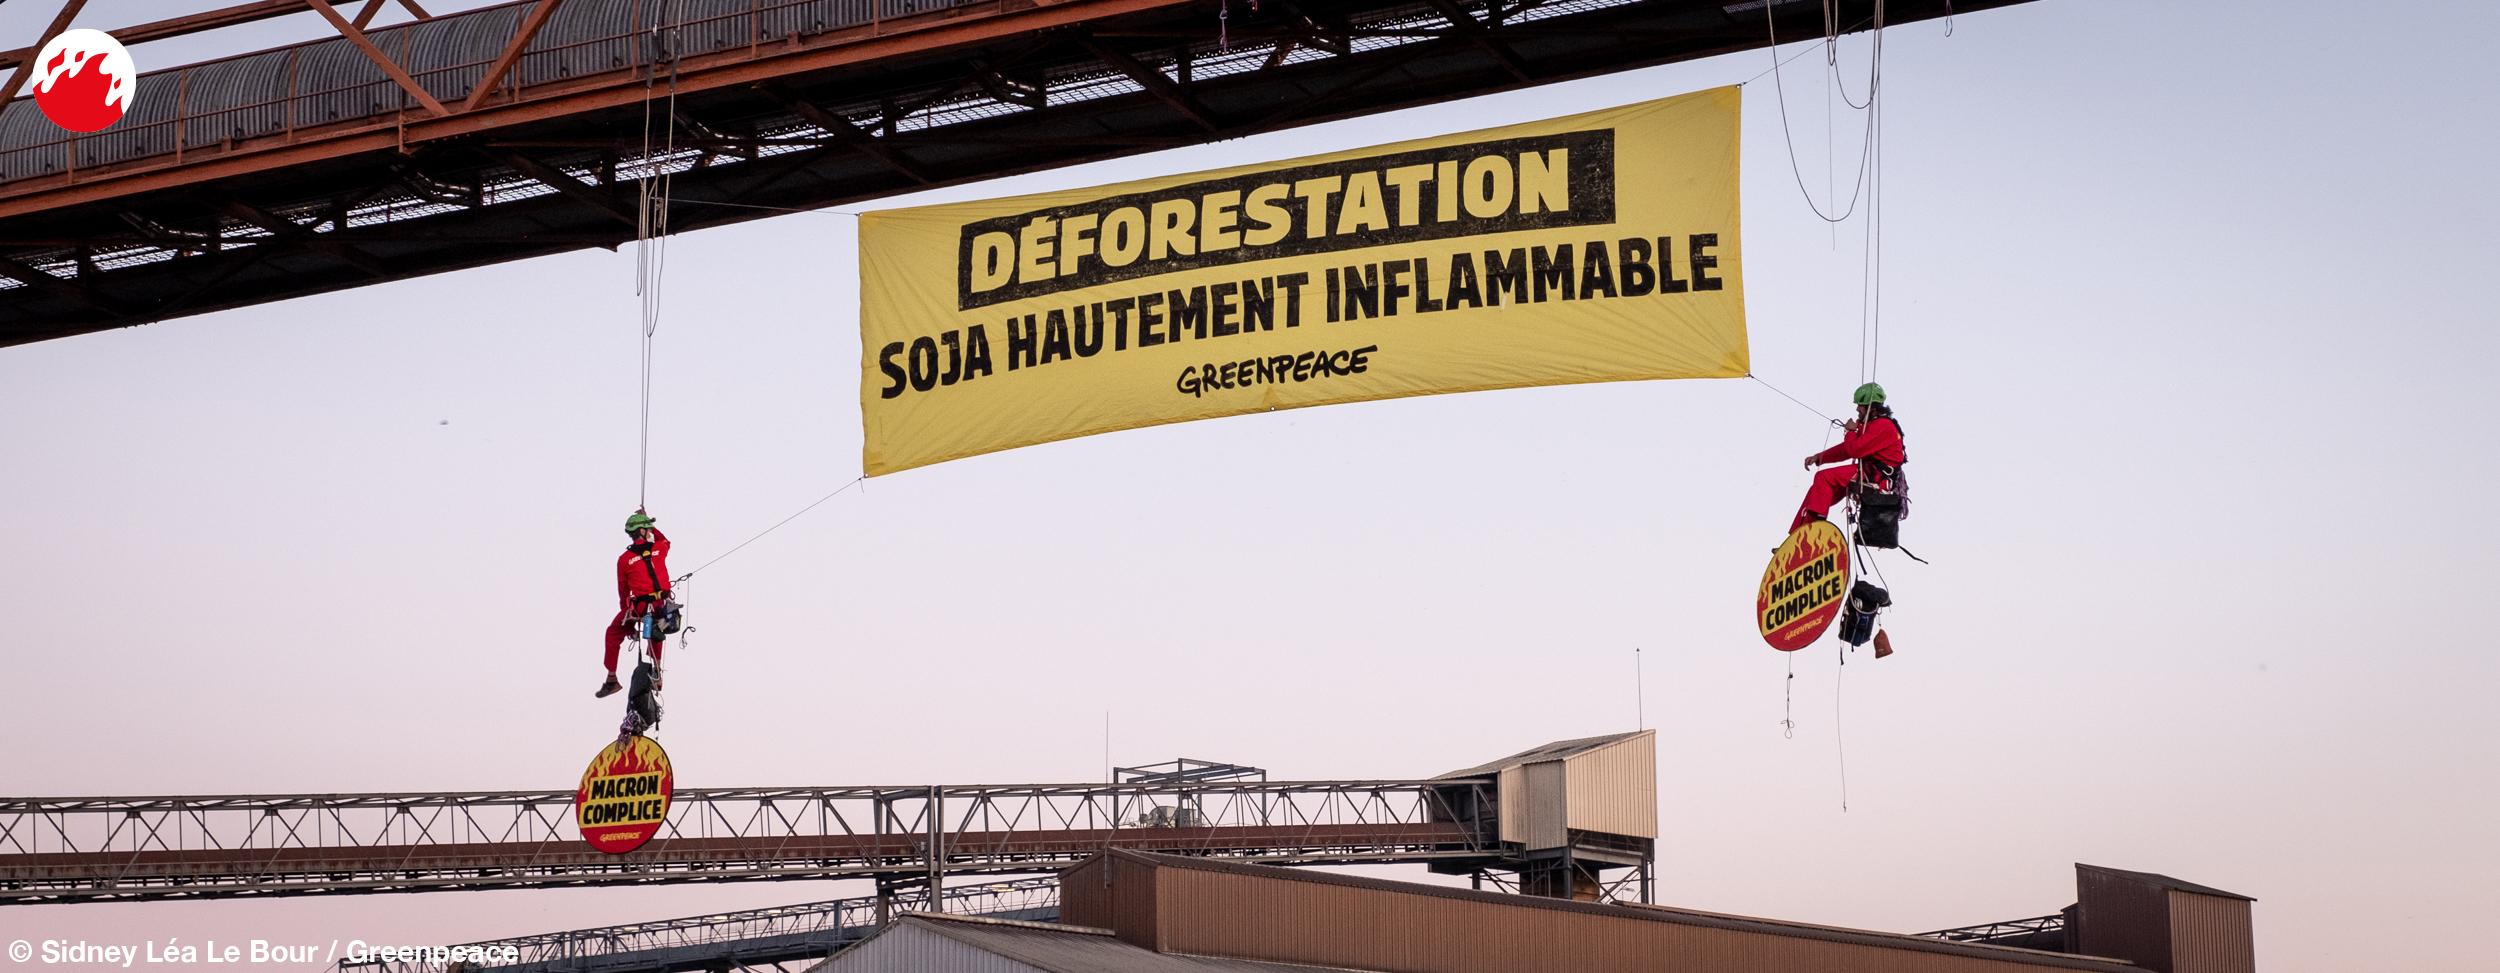 Déforestation : Soja hautement inflammable